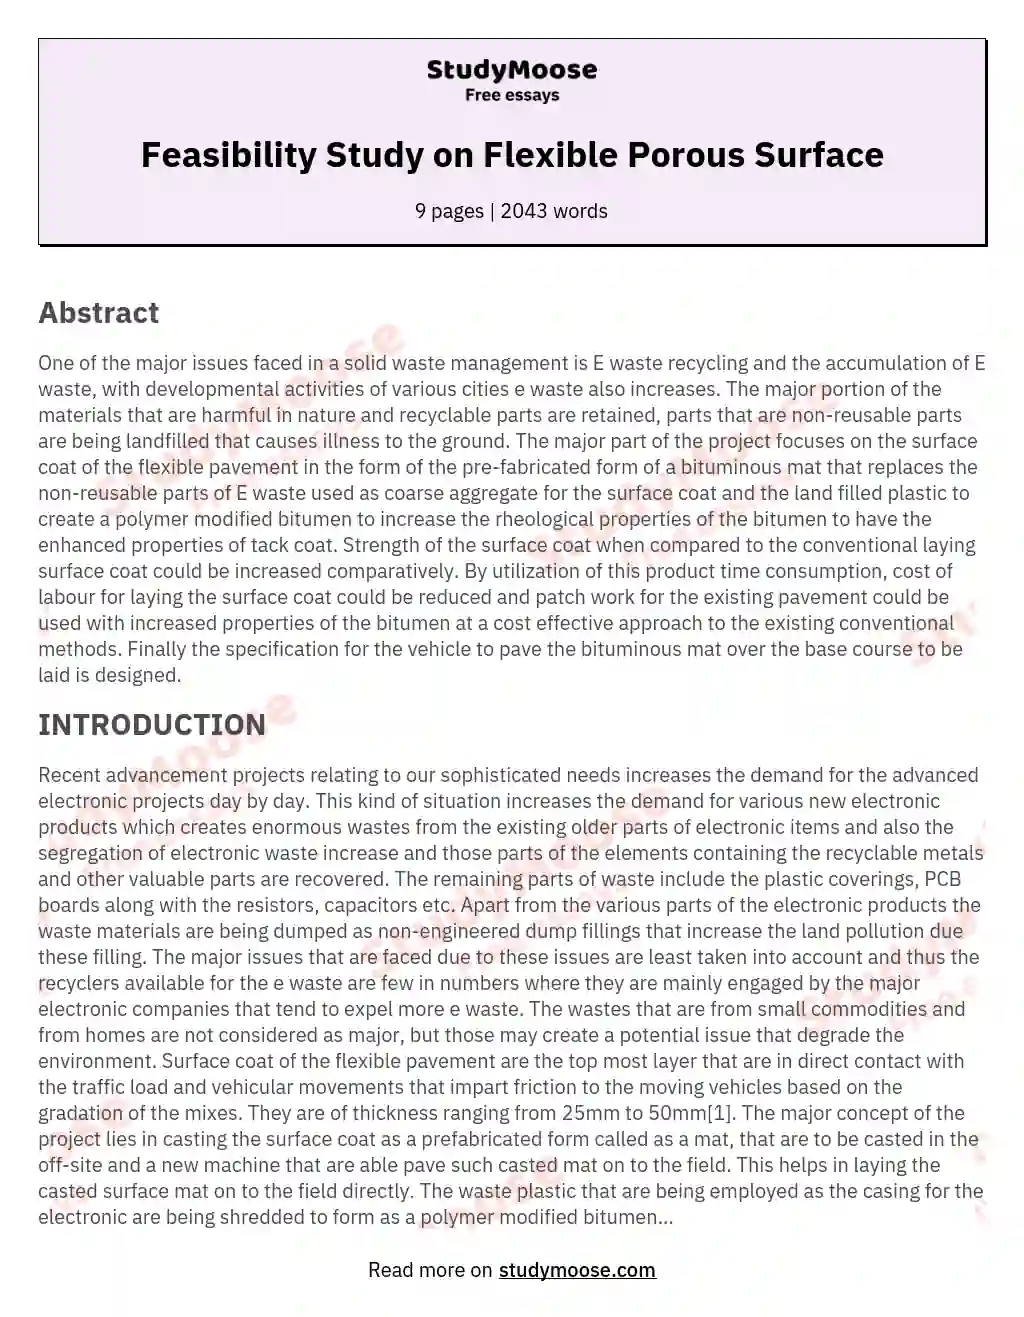 Feasibility Study on Flexible Porous Surface essay